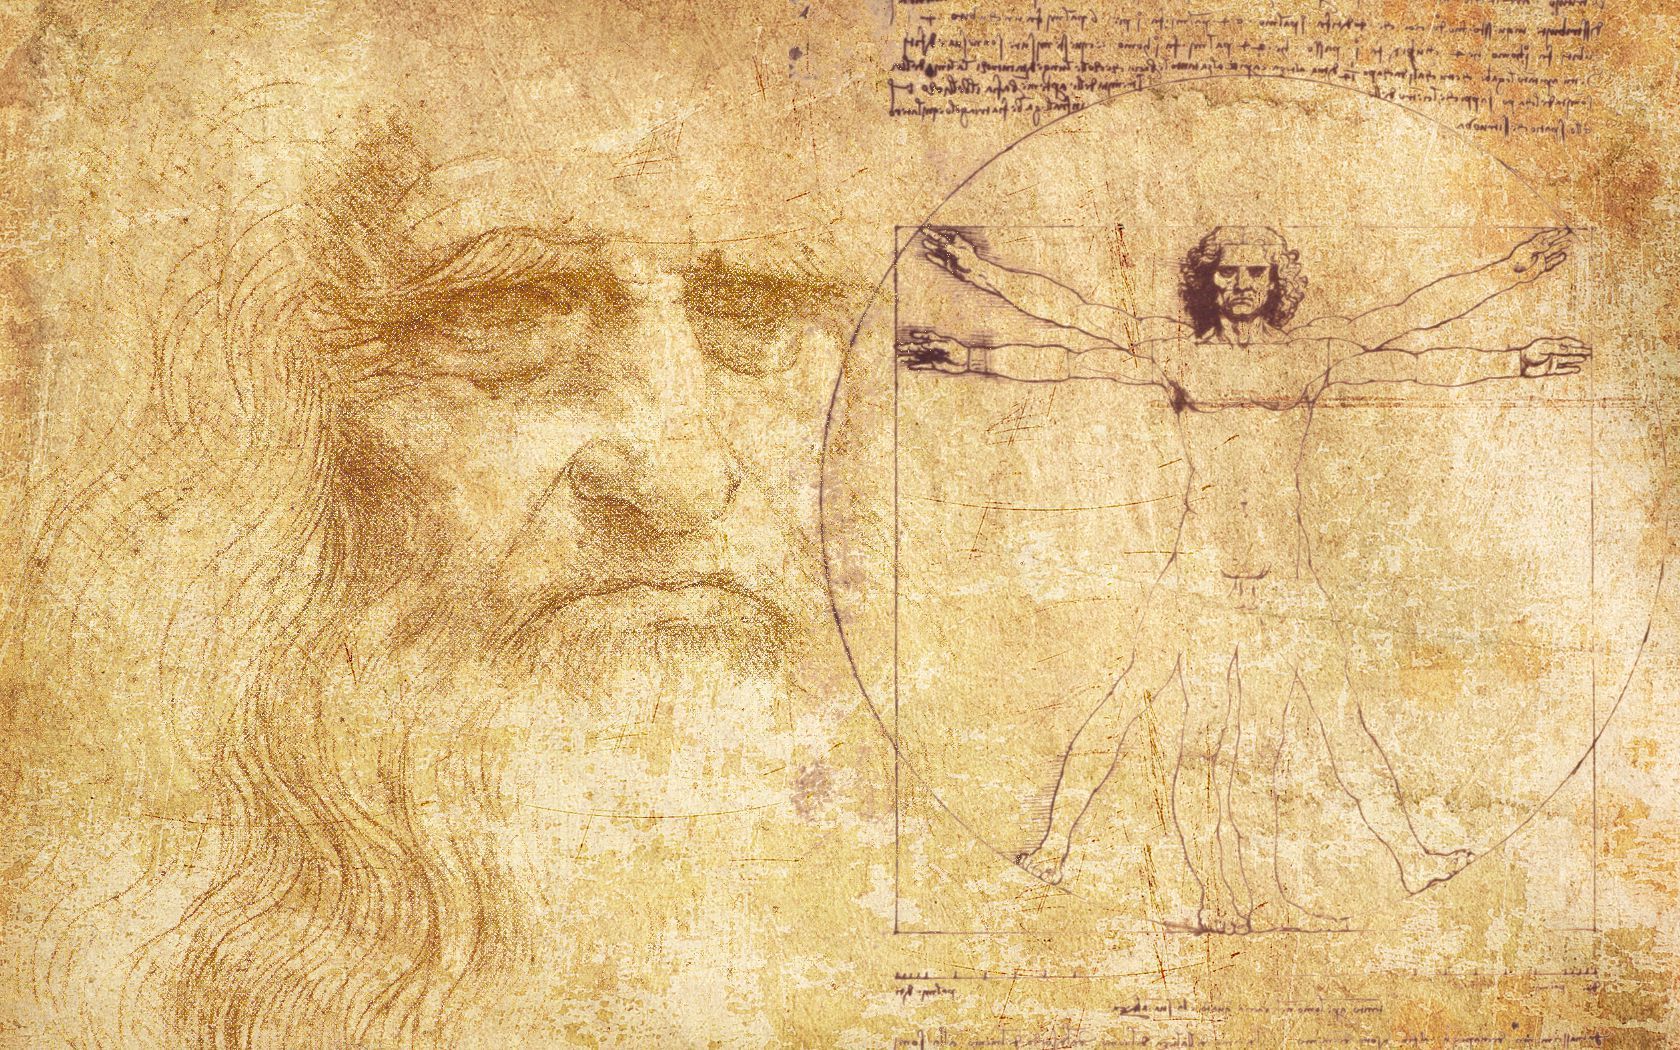 Что преподал человечеству Леонардо да Винчи?